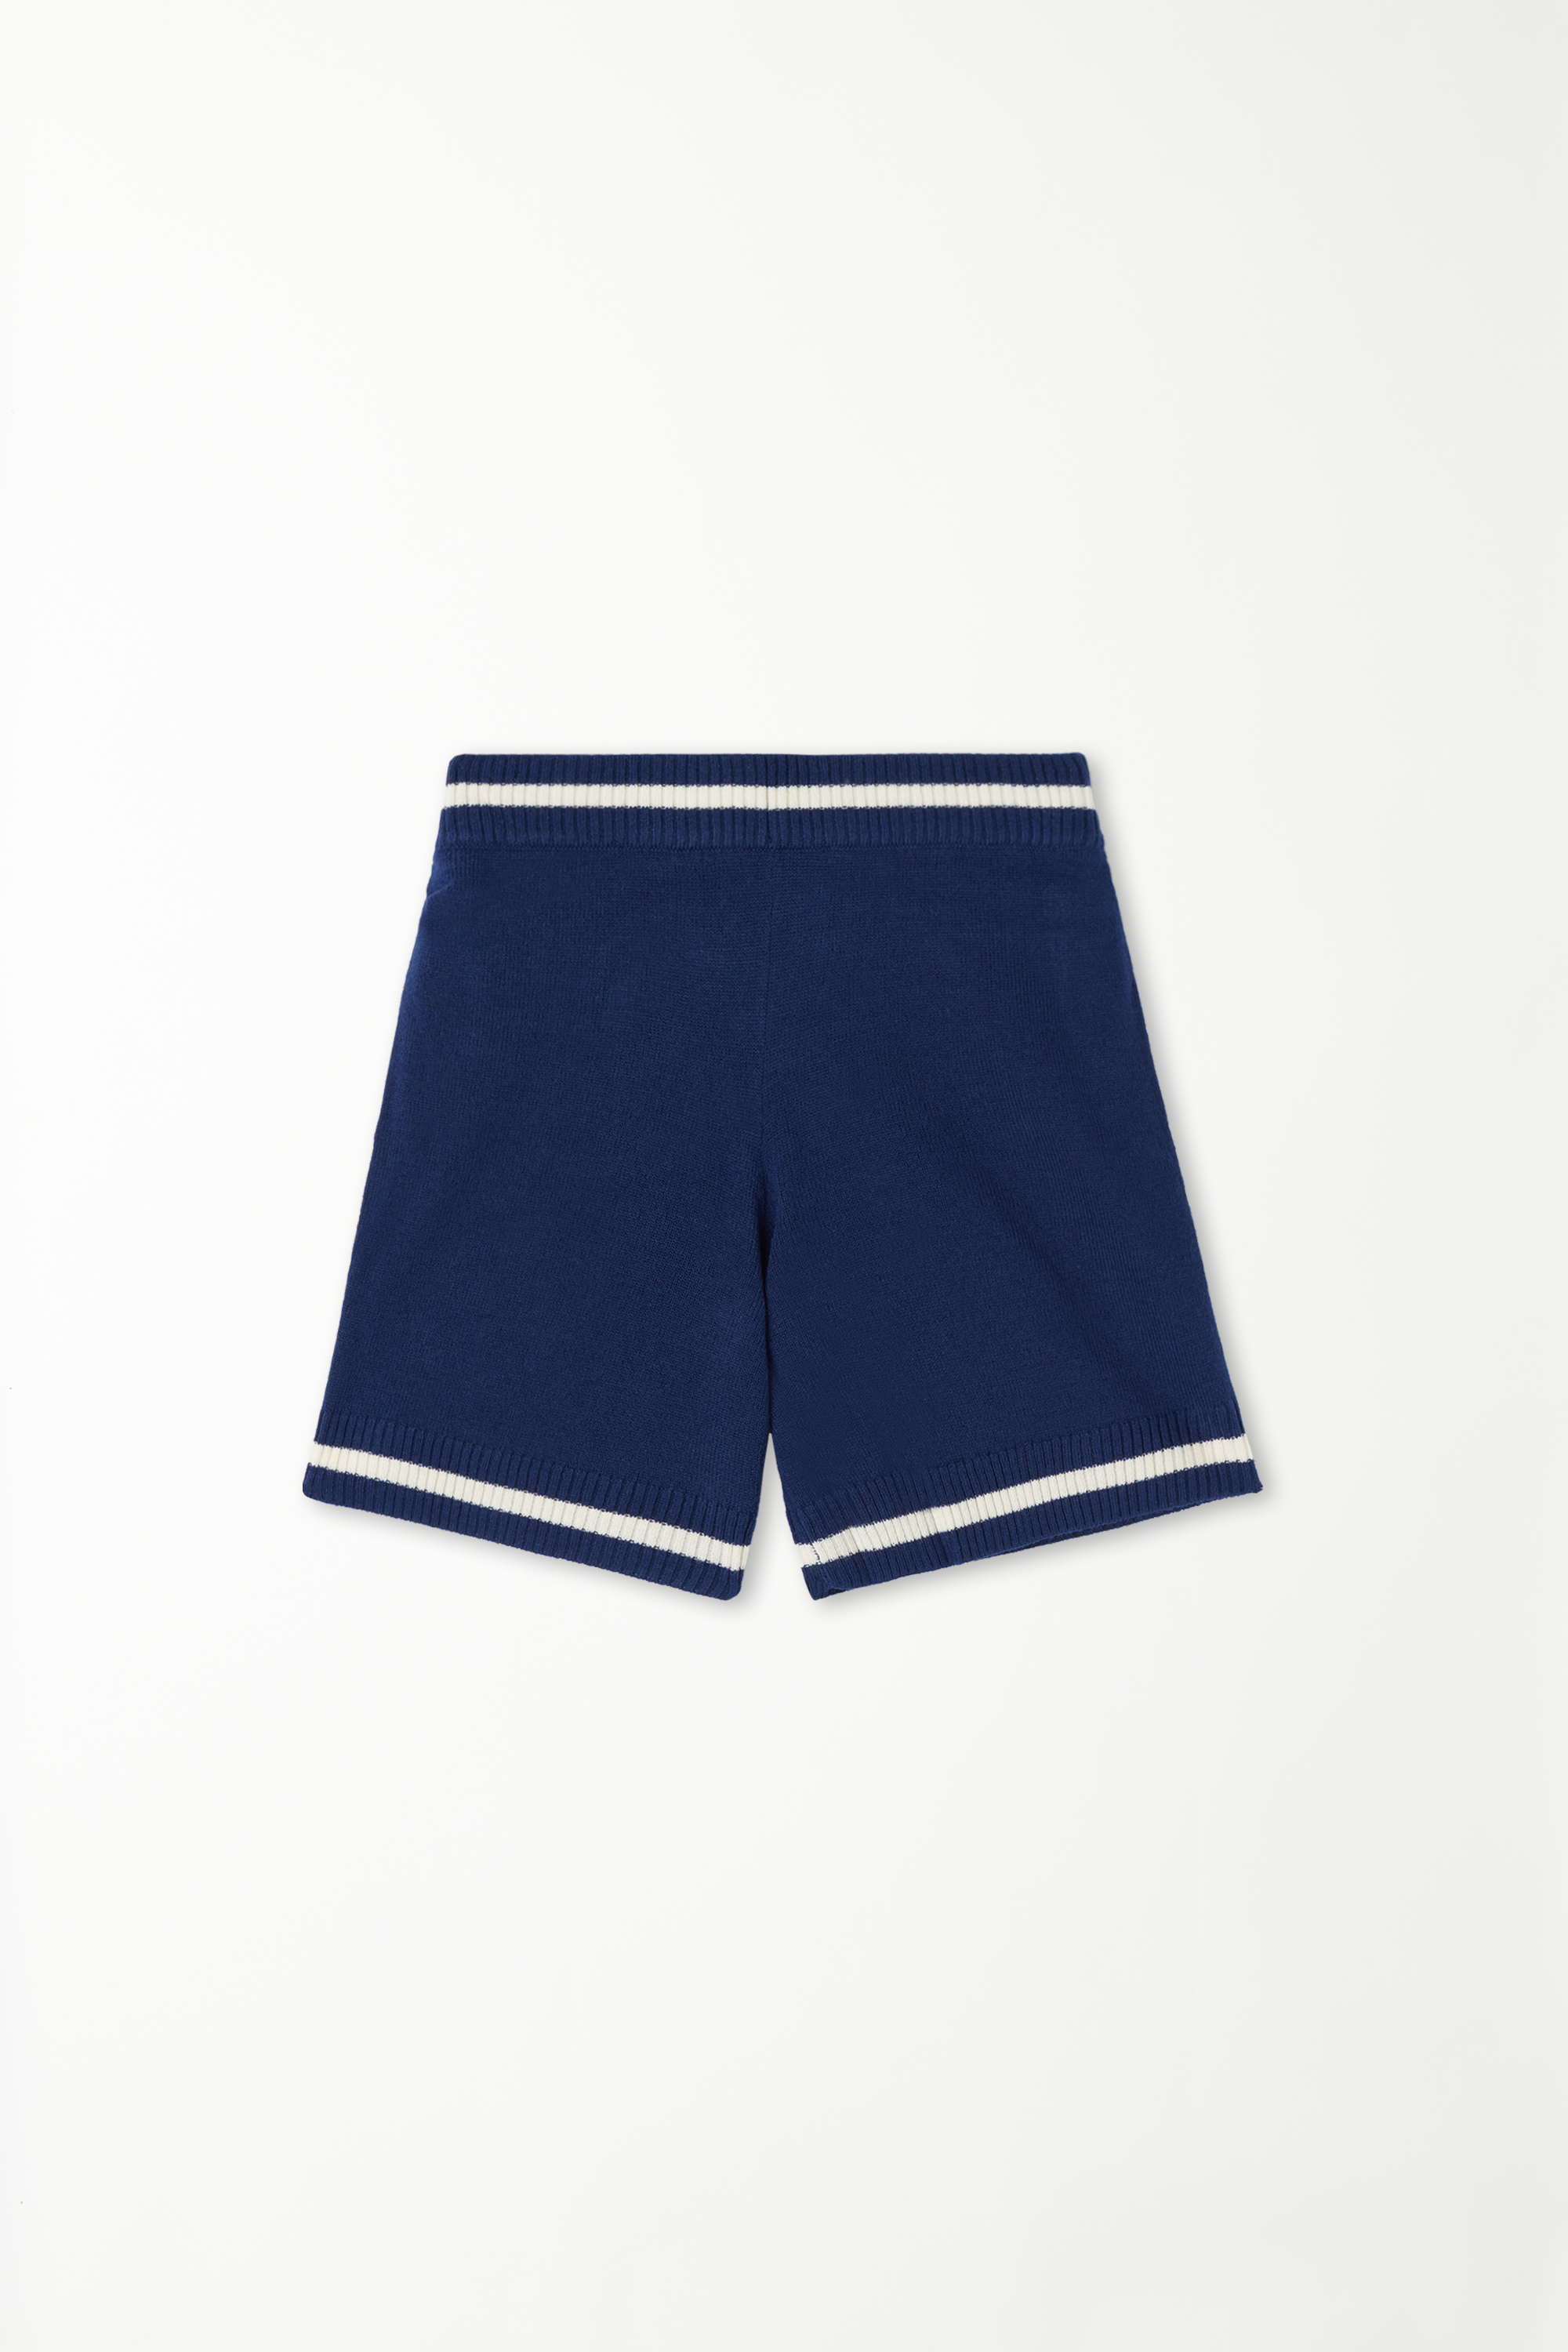 Girls’ Two-Tone Fully-Fashioned Shorts